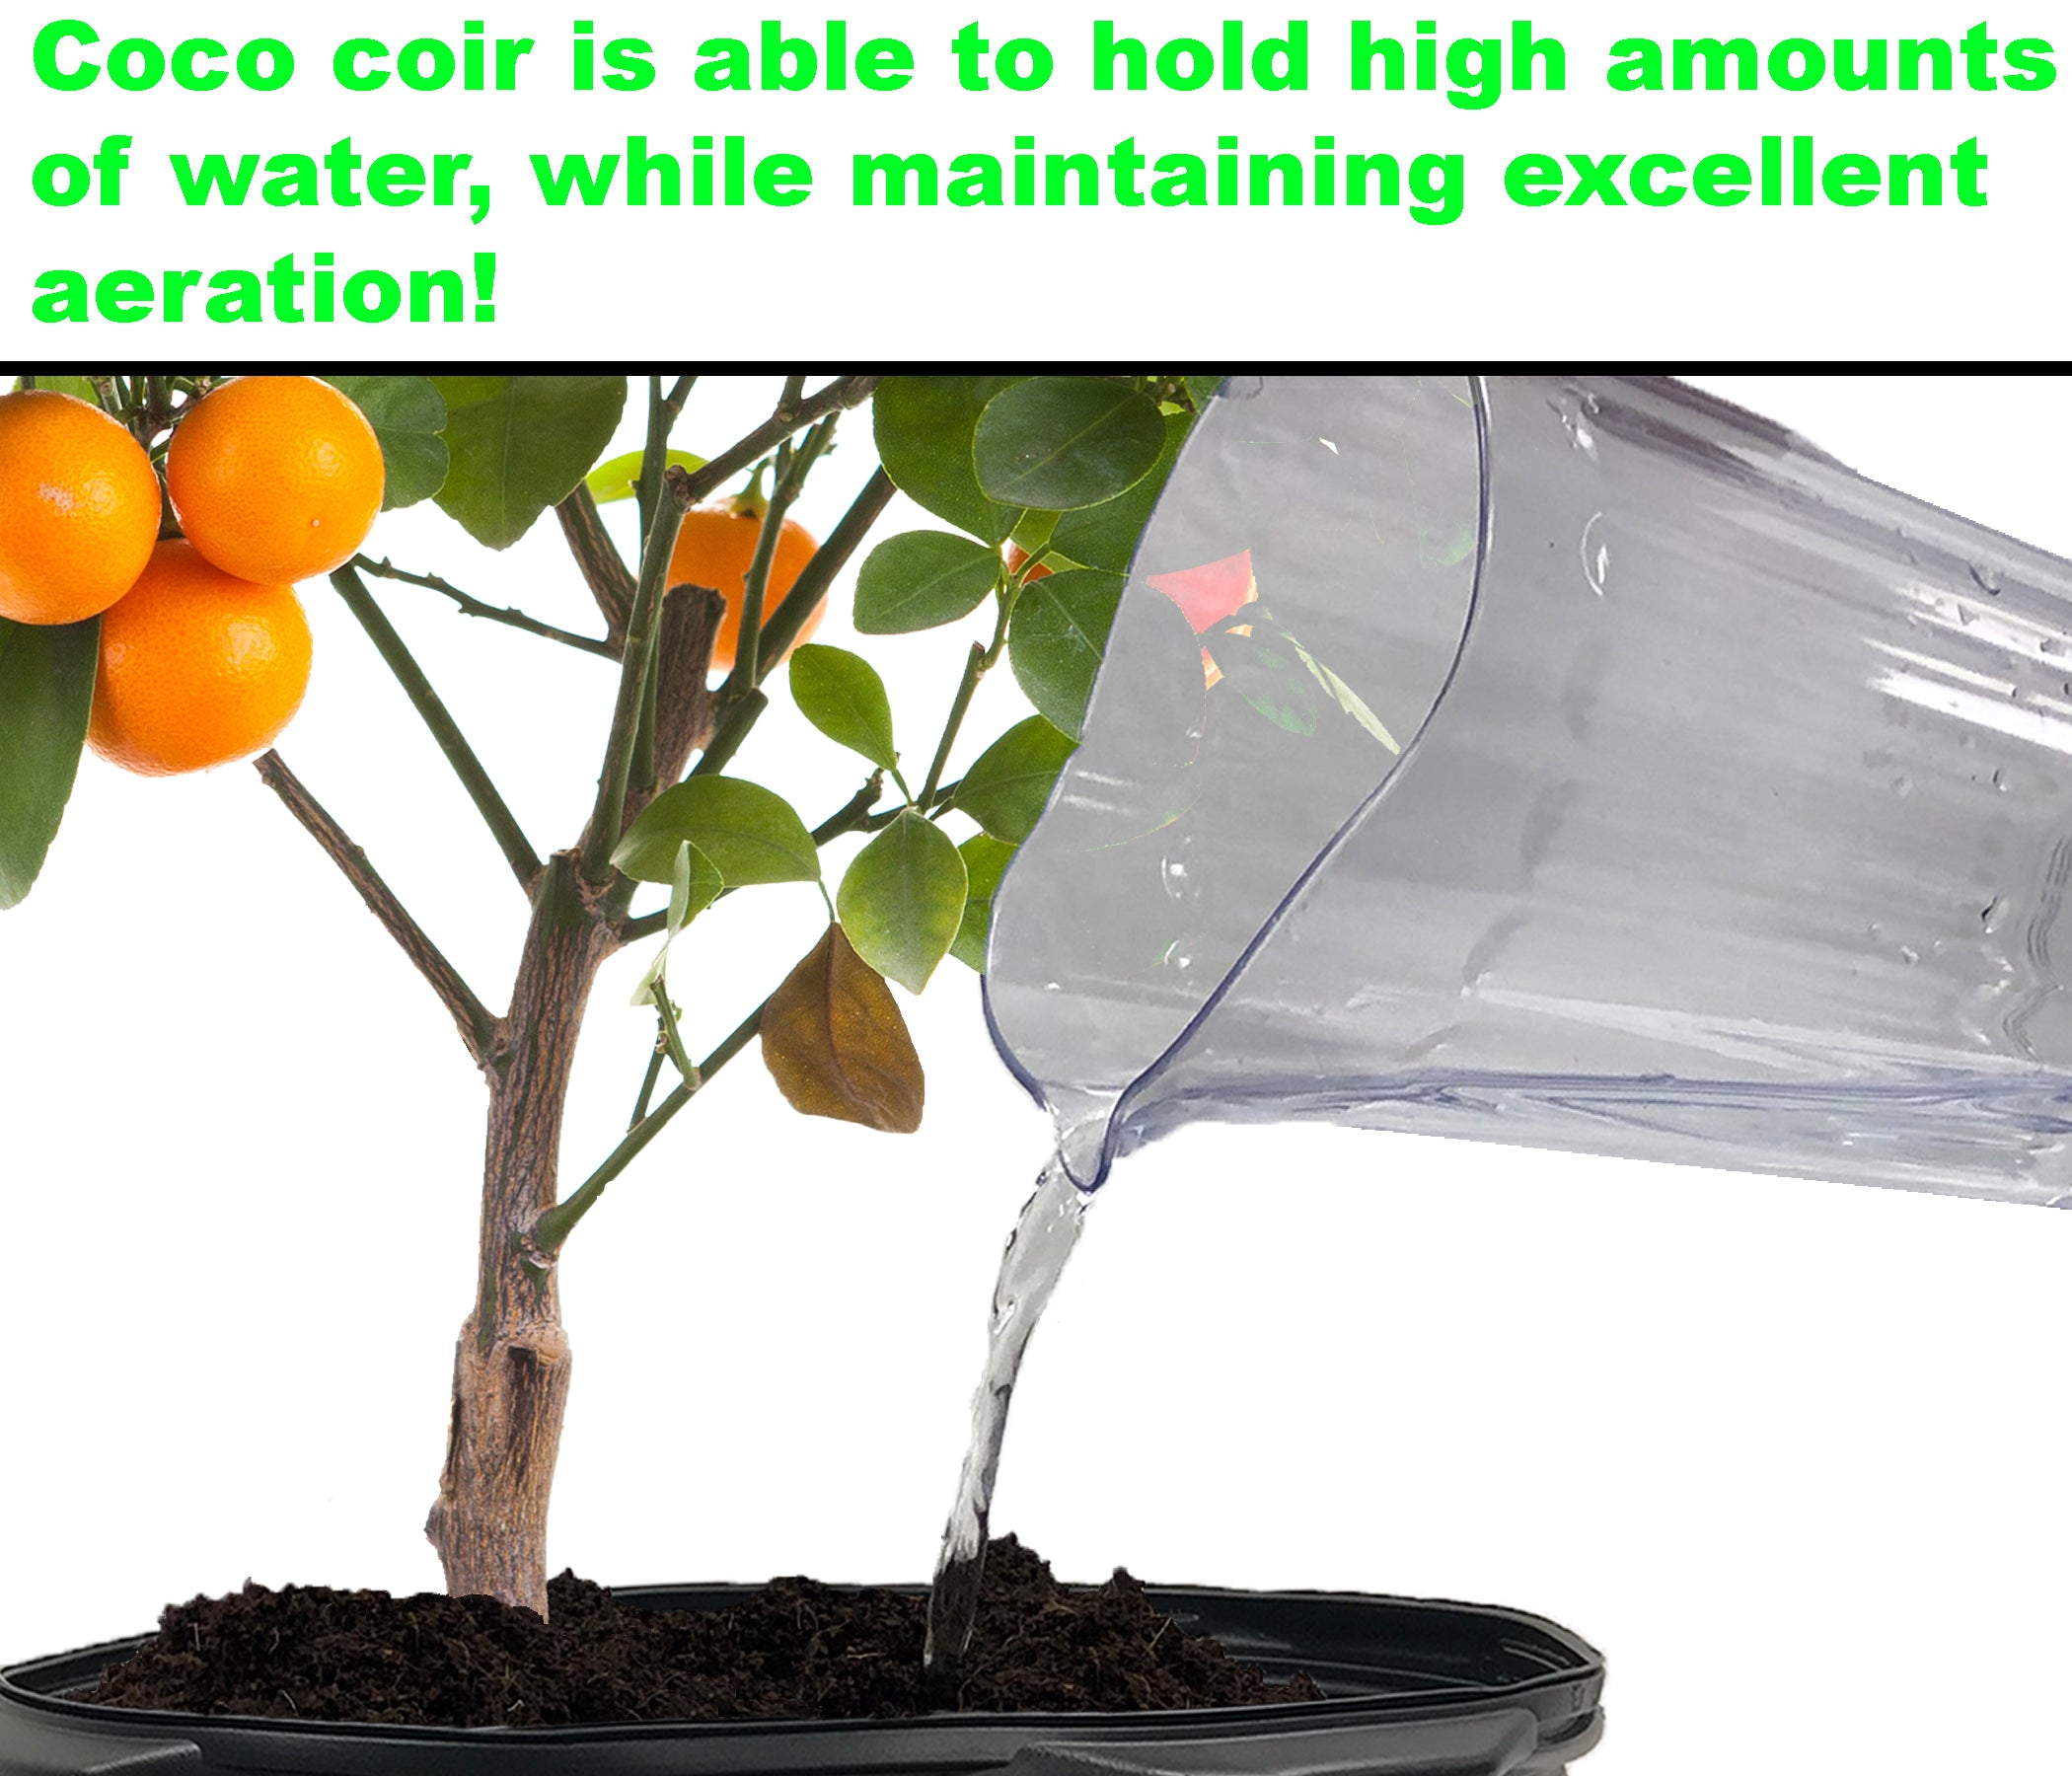 Viagrow Premium Coco Coir, 11 lb. Coconut Coir Block of Soilless Media (220 Bricks Per Pallet)